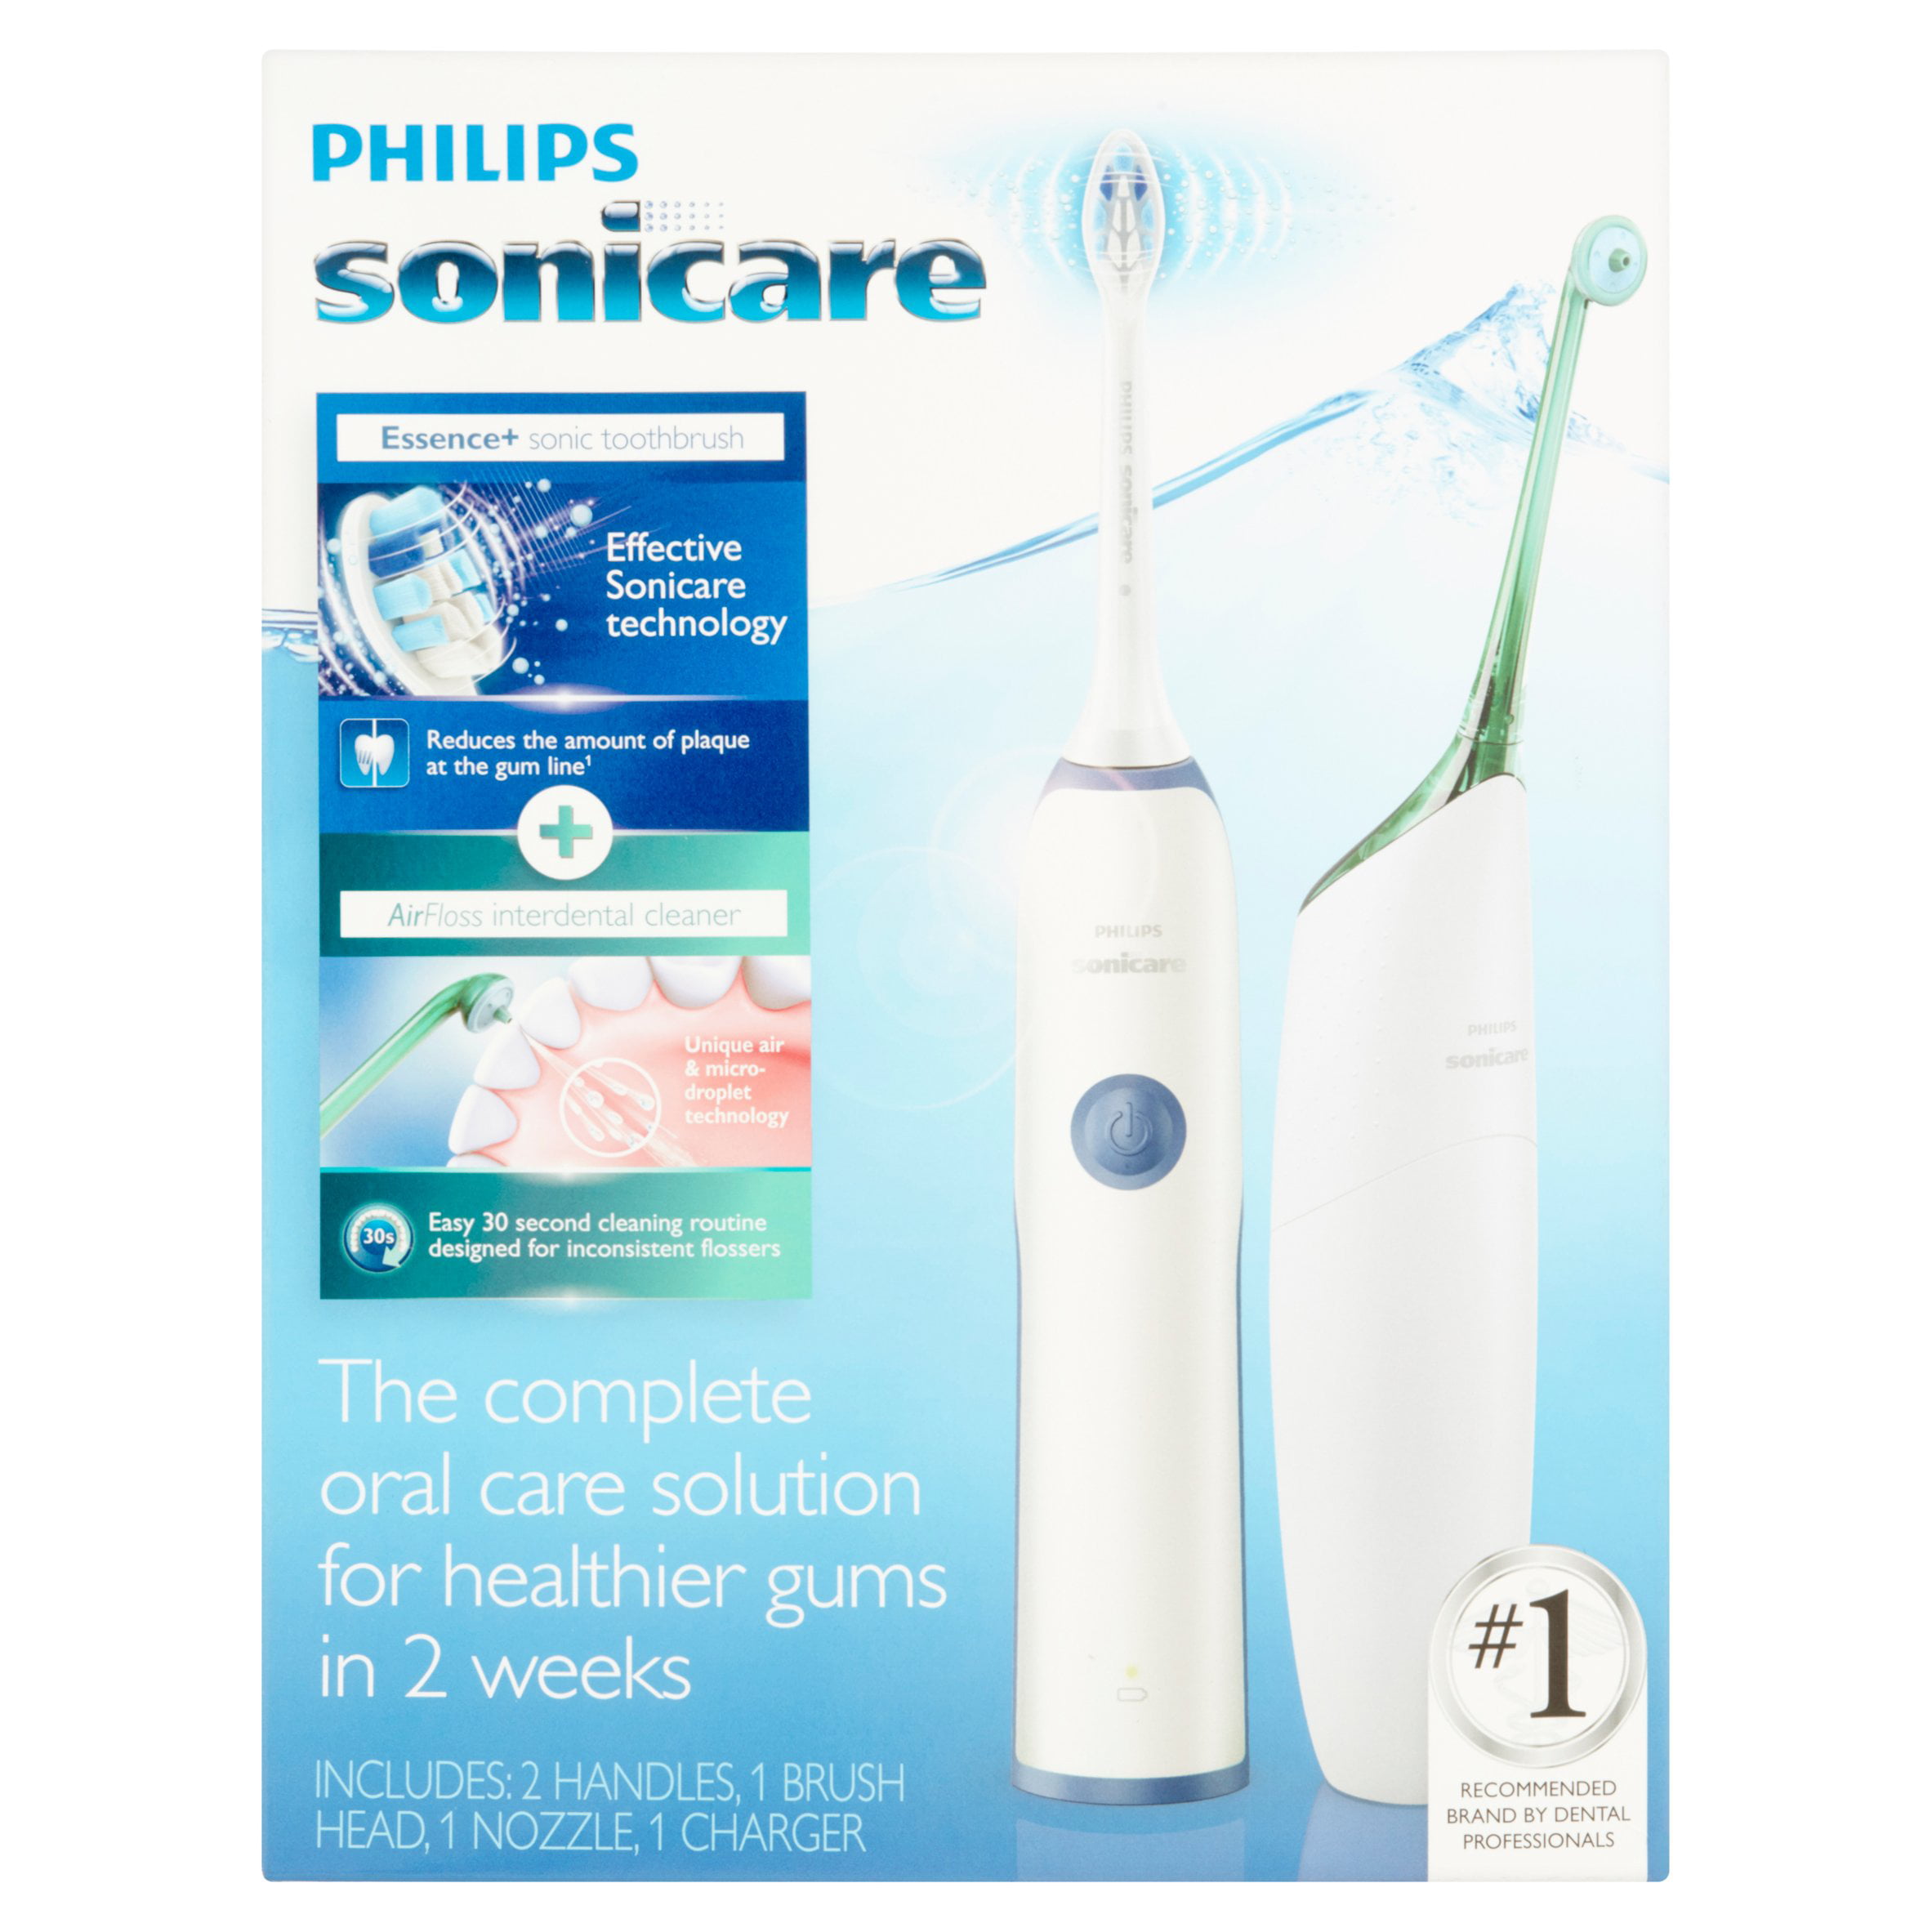 philips-sonicare-essence-sonic-toothbrush-airfloss-interdental